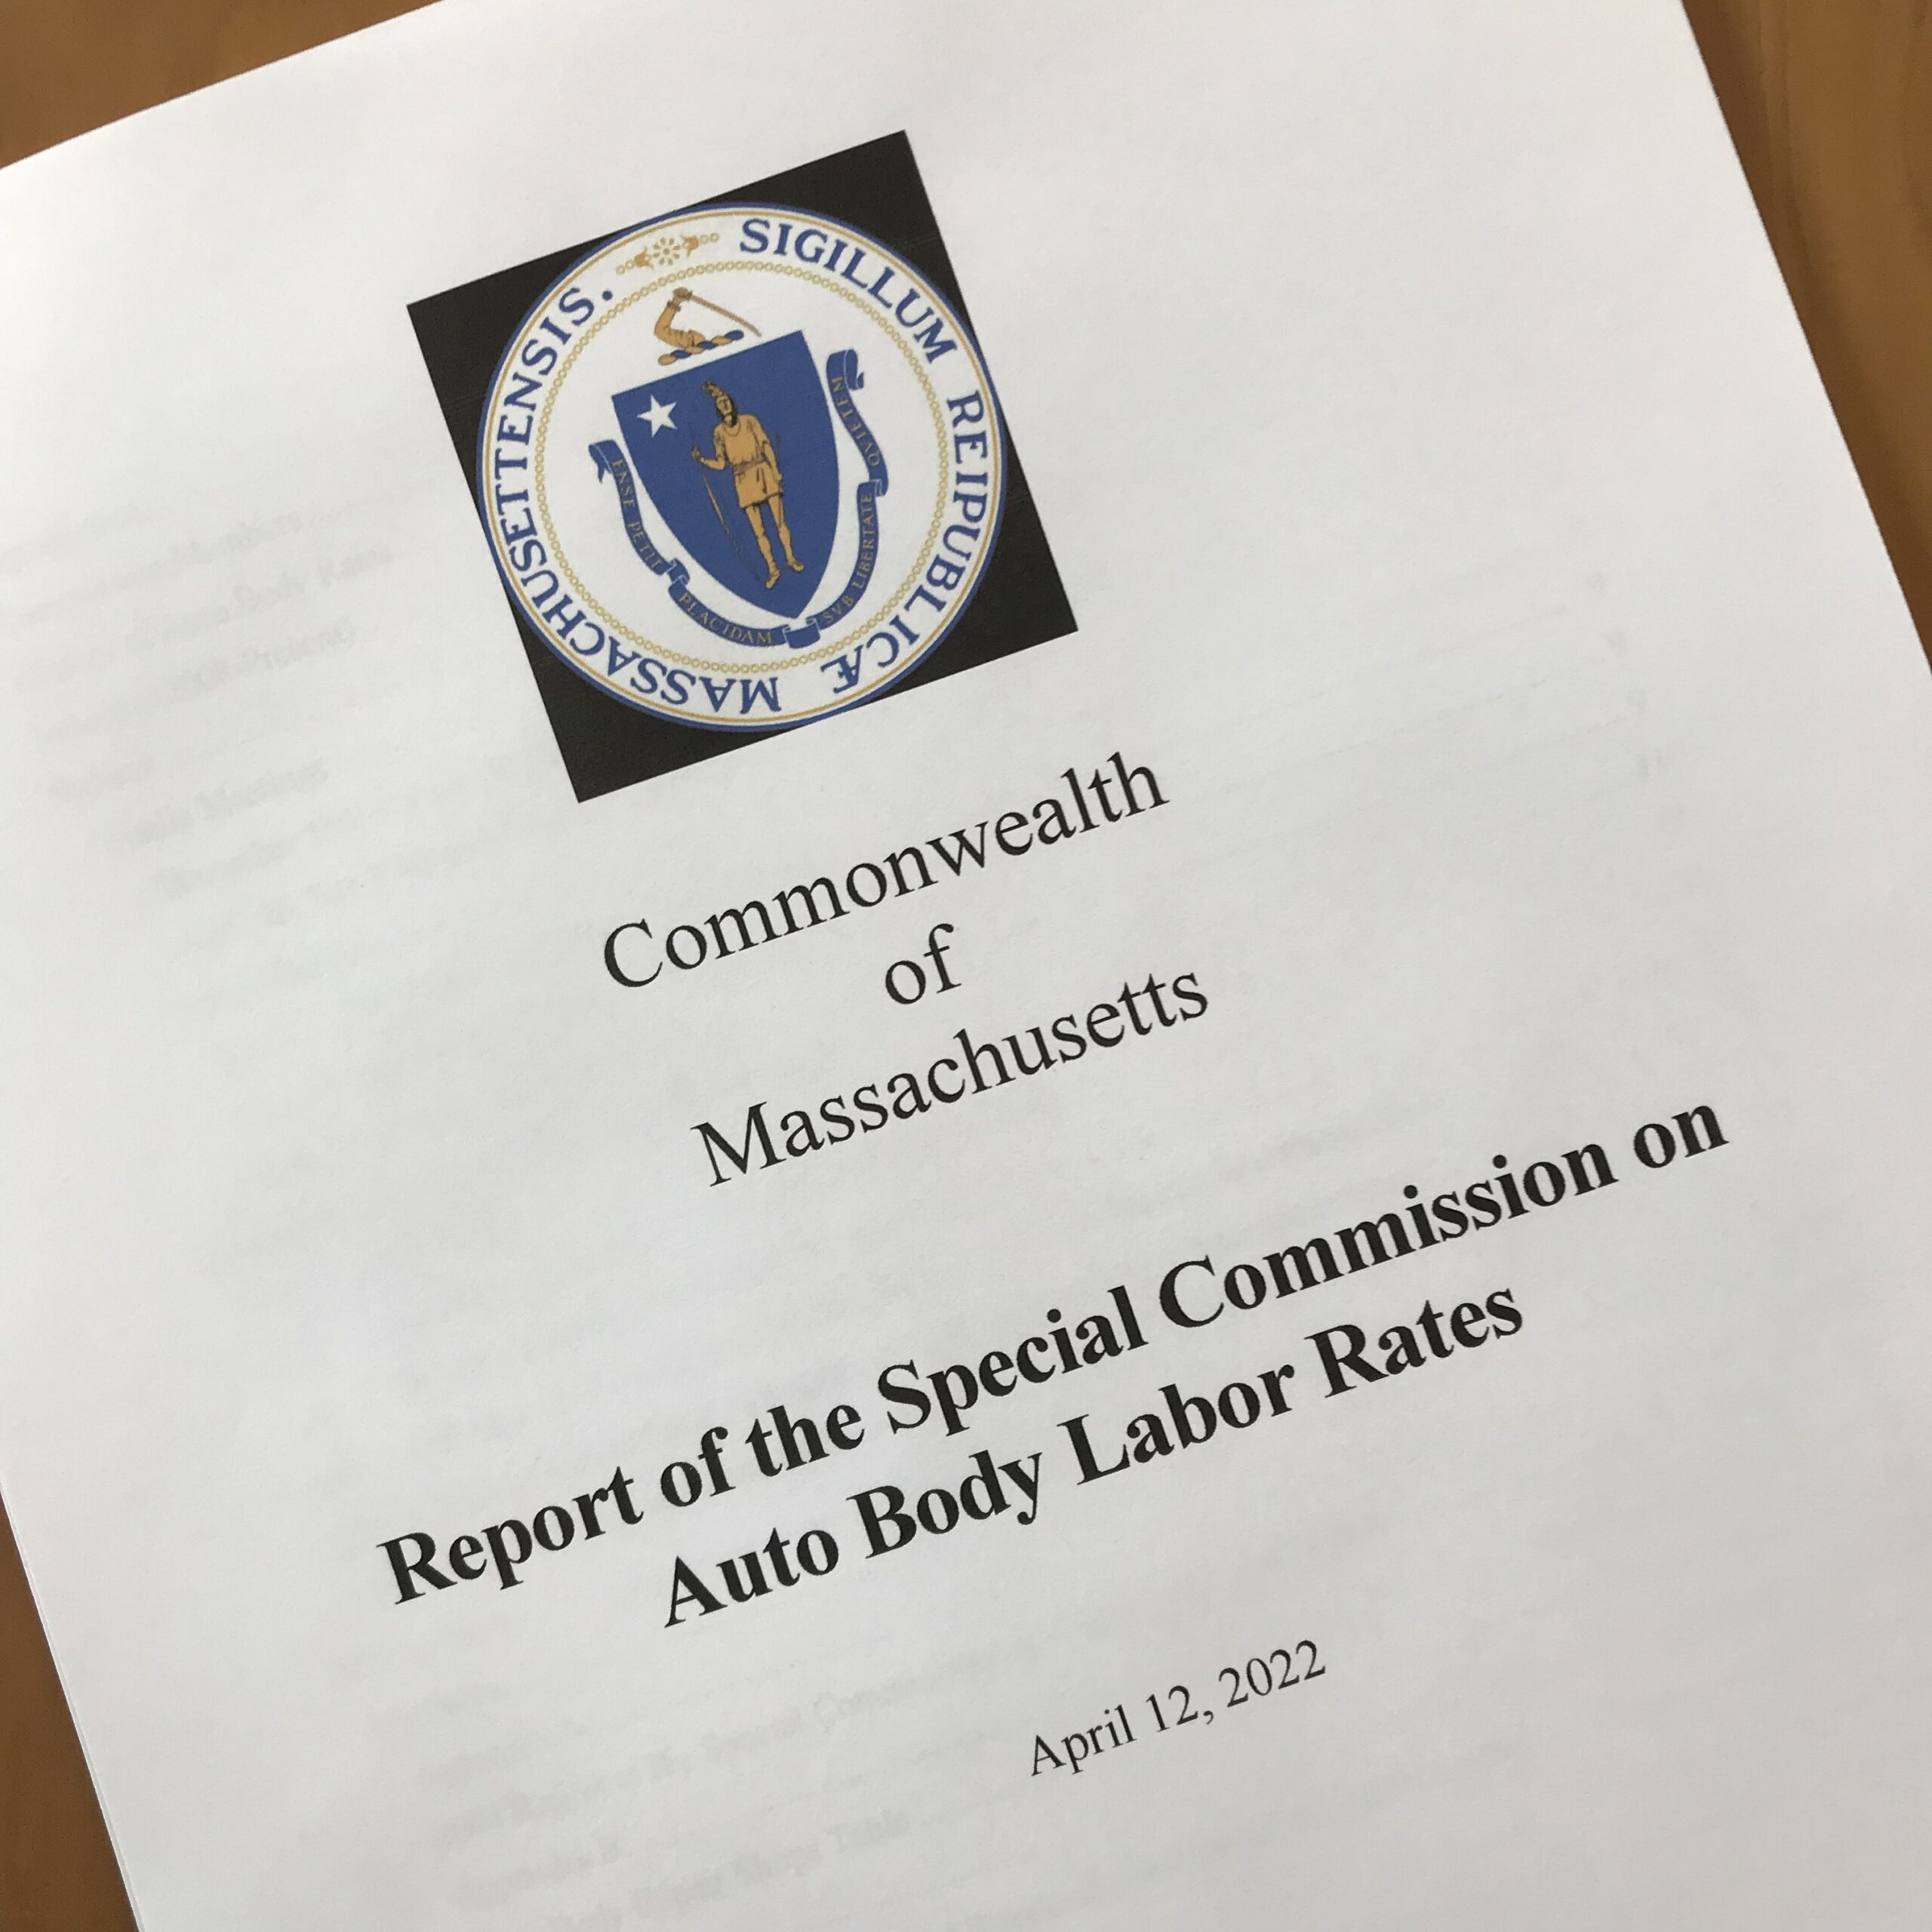 Despite legislative standstill, Massachusetts auto body labor rate bill remains alive